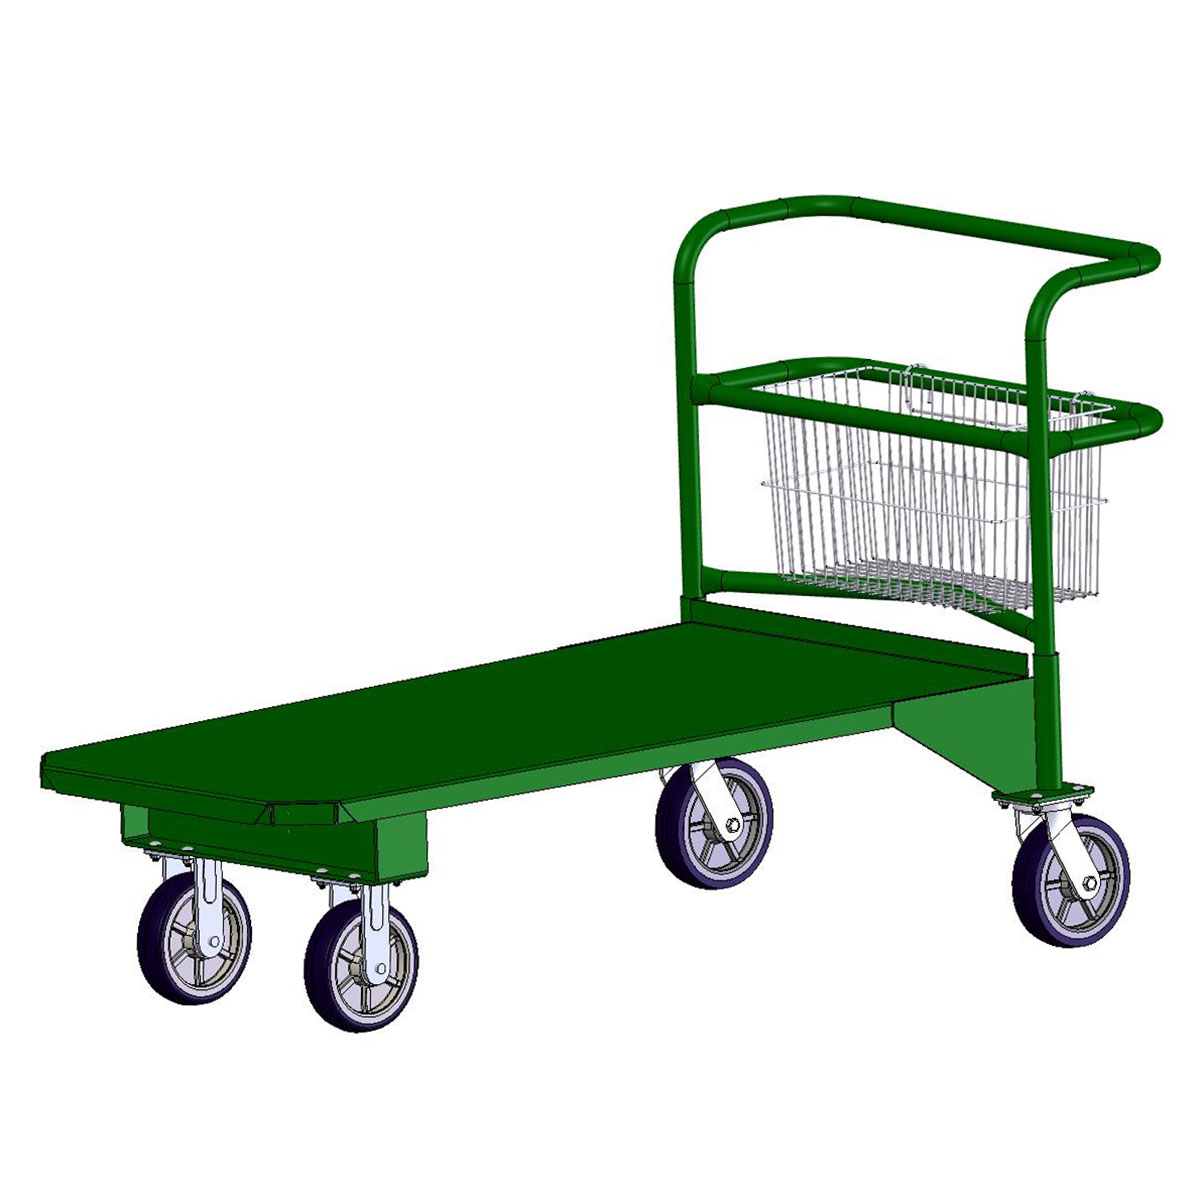 Nesting Carts distribution cart industrial cart material handling